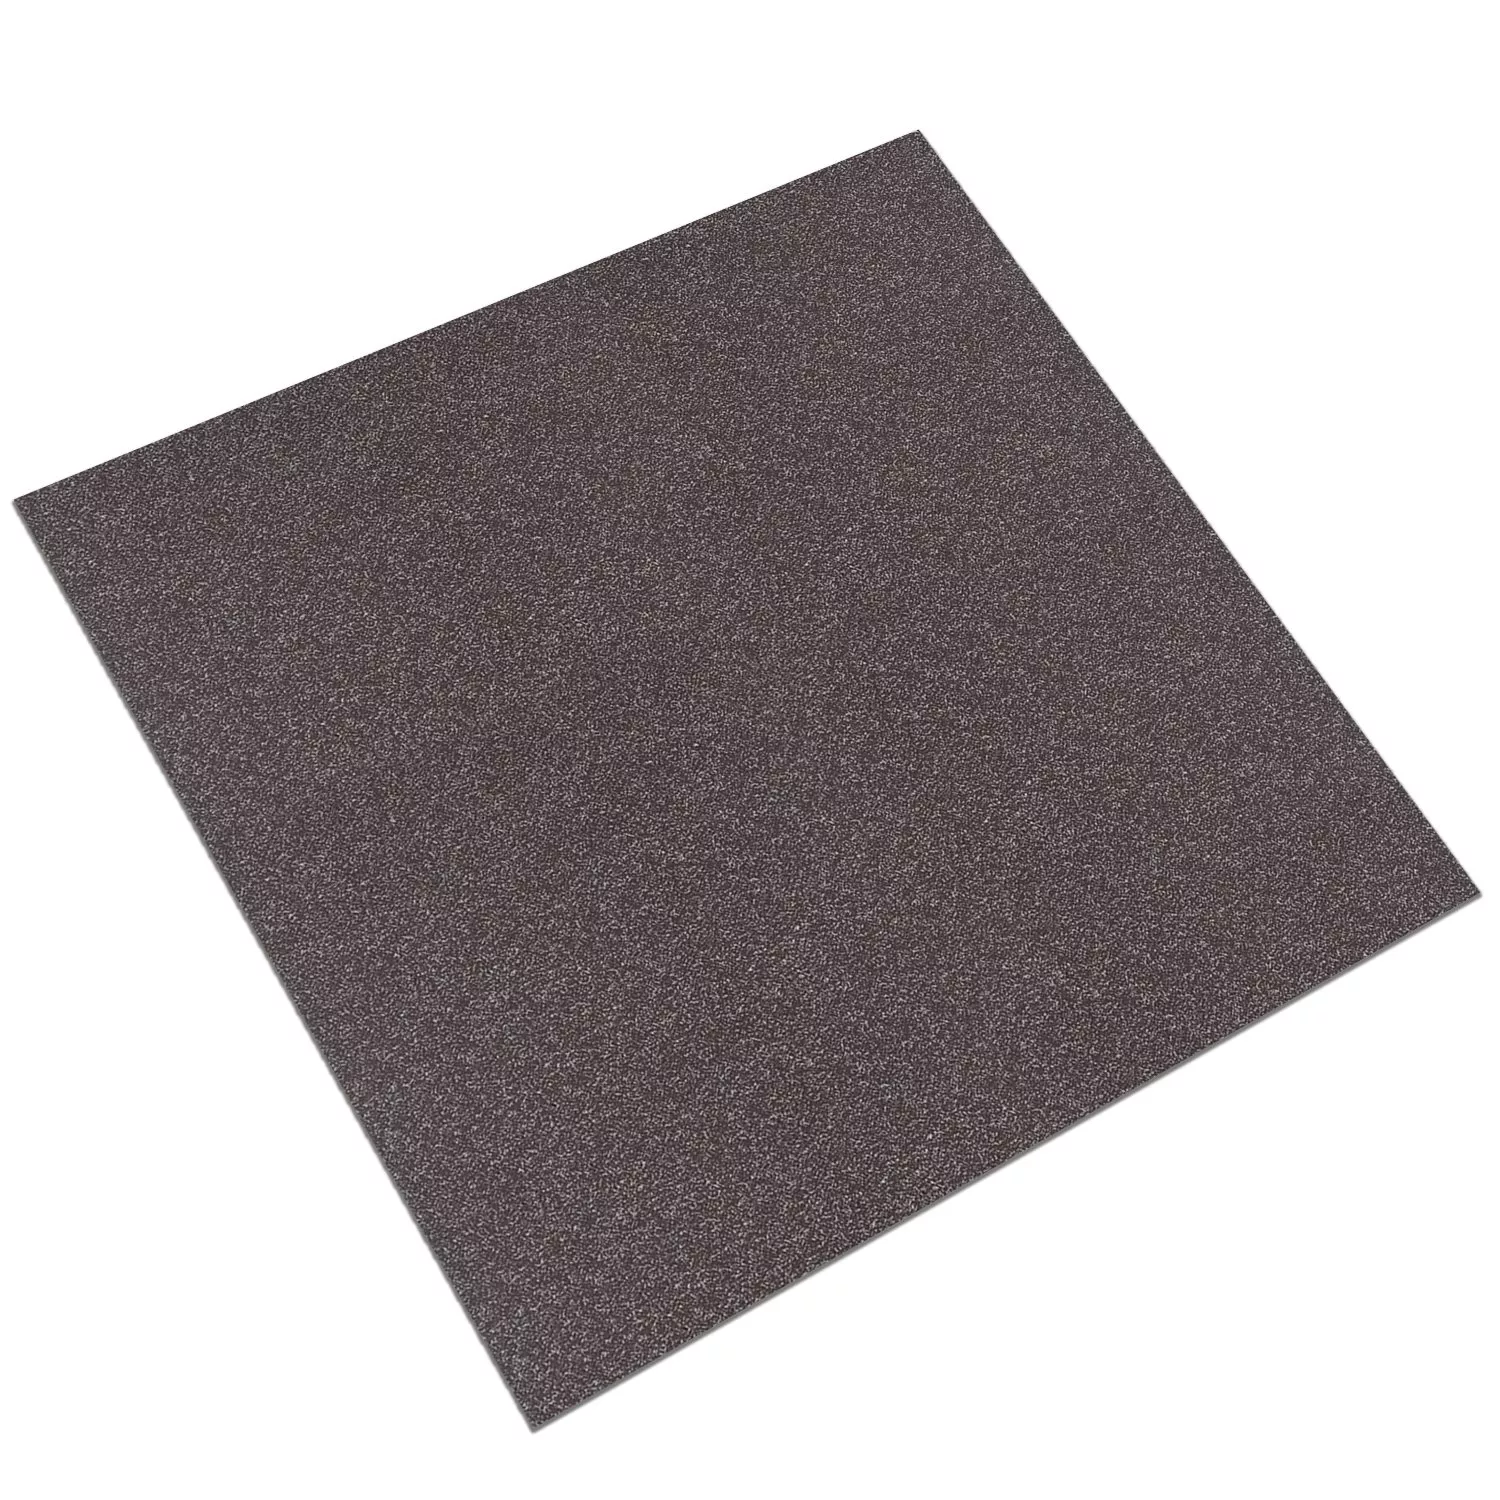 Sample Floor Tiles Courage Fine Grain R10/A Anthracite 20x20cm